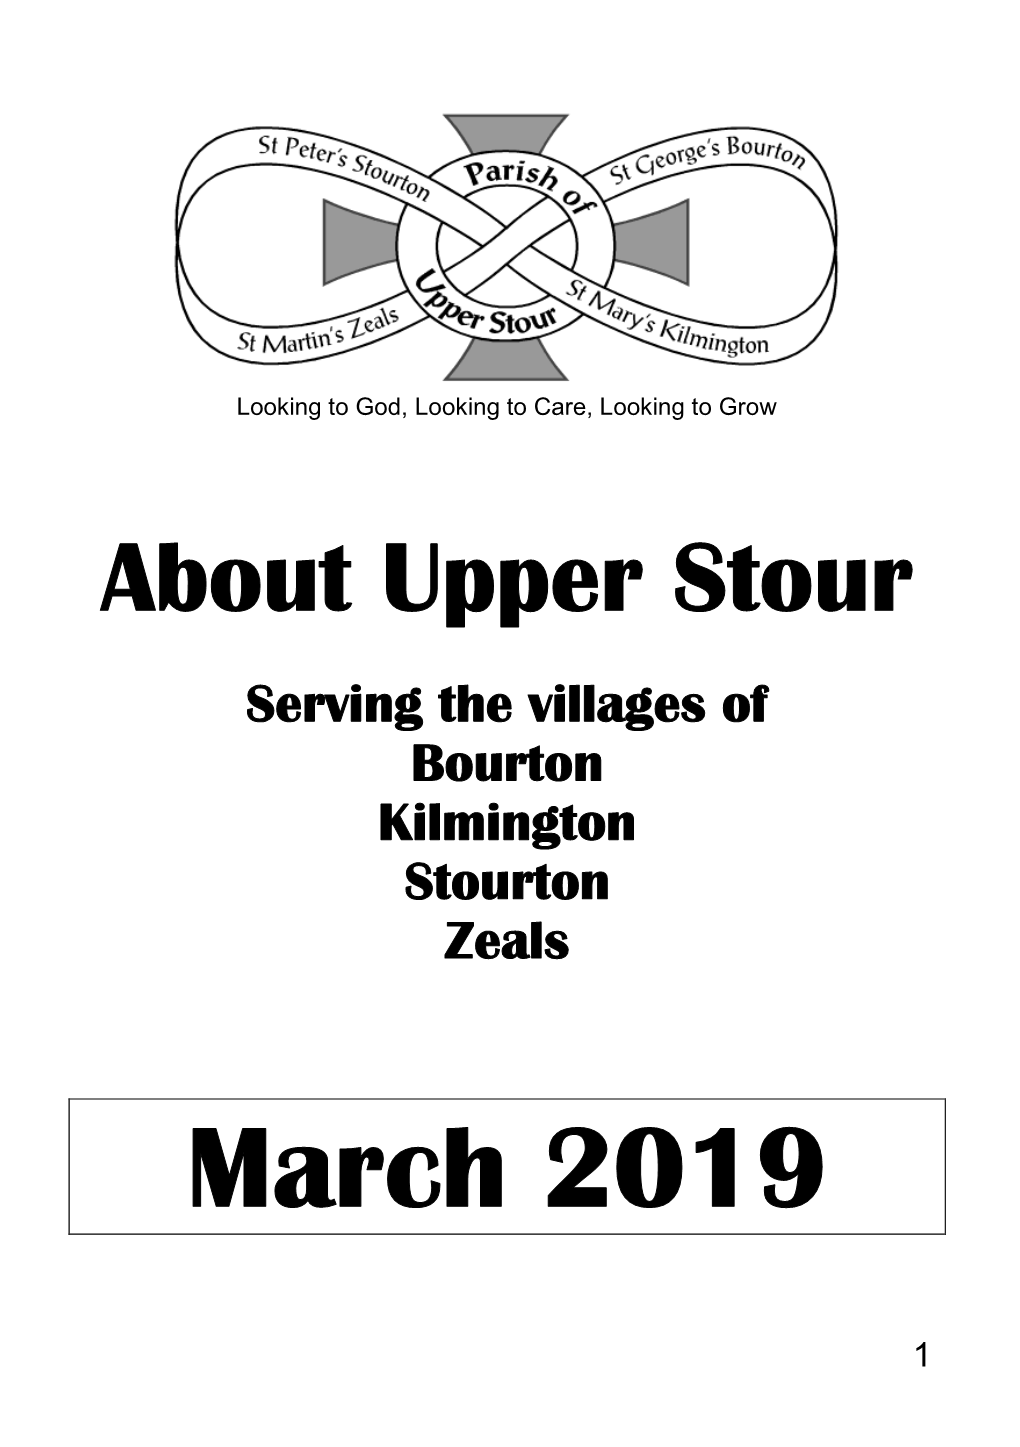 Serving the Villages of Bourton Kilmington Stourton Zeals